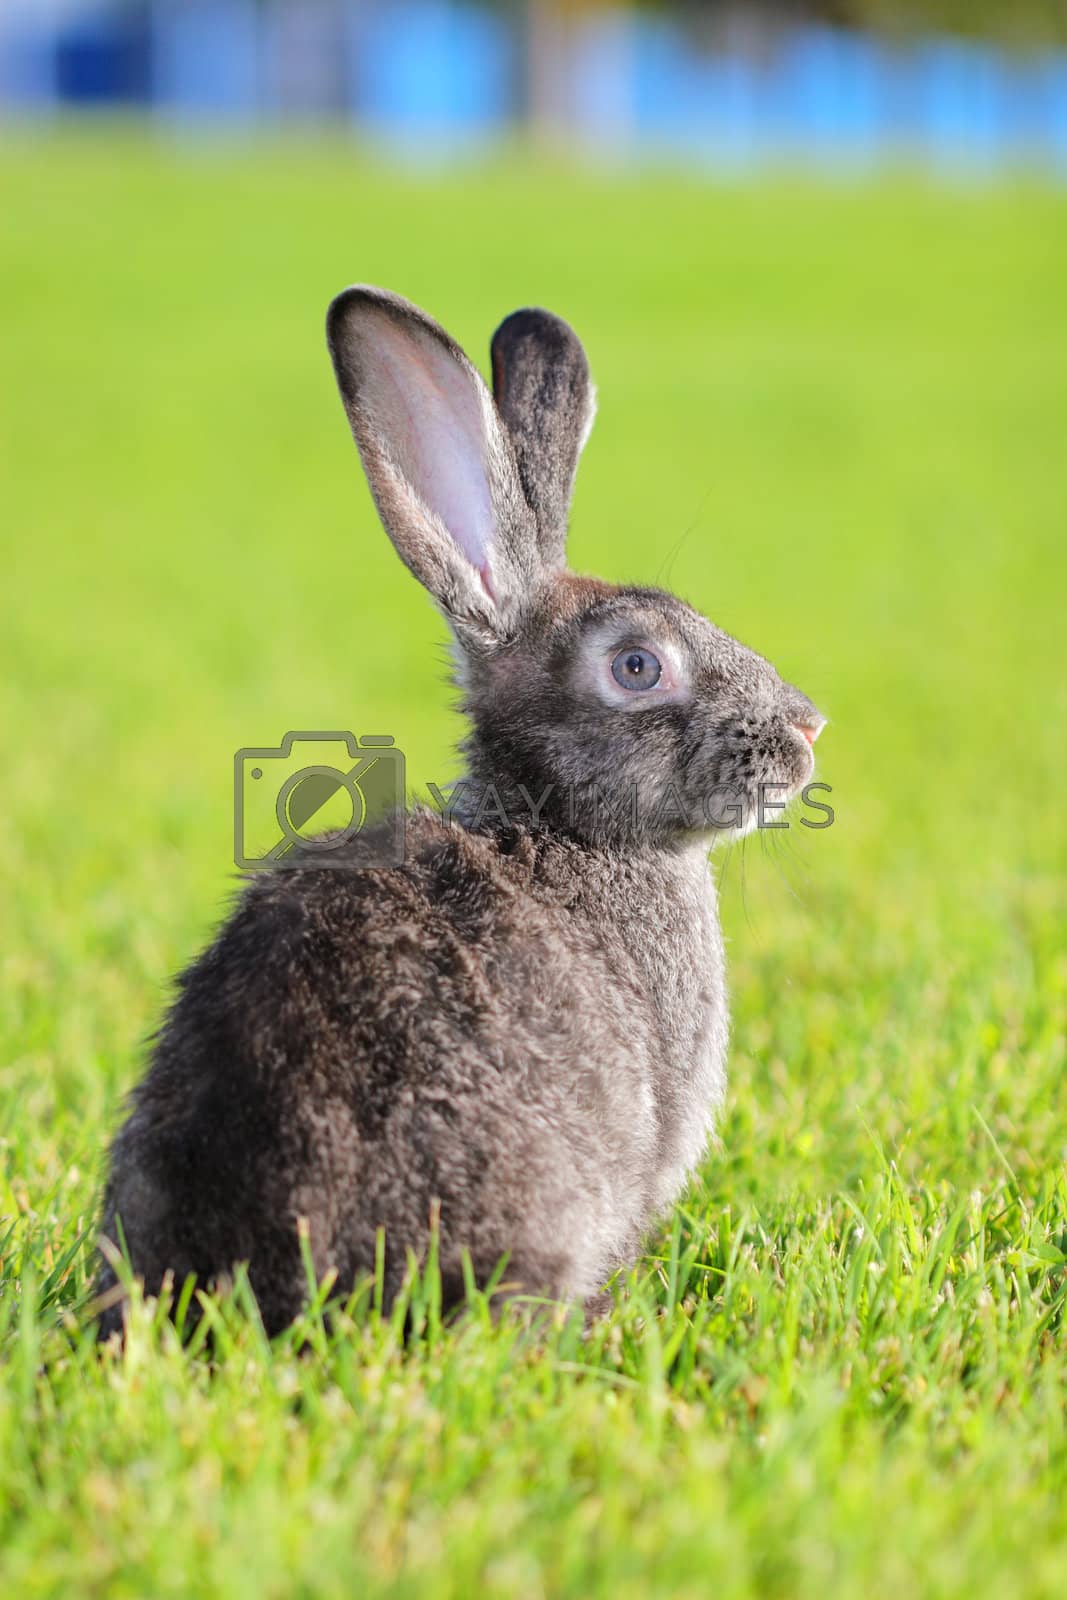 Royalty free image of Rabbit by kokimk